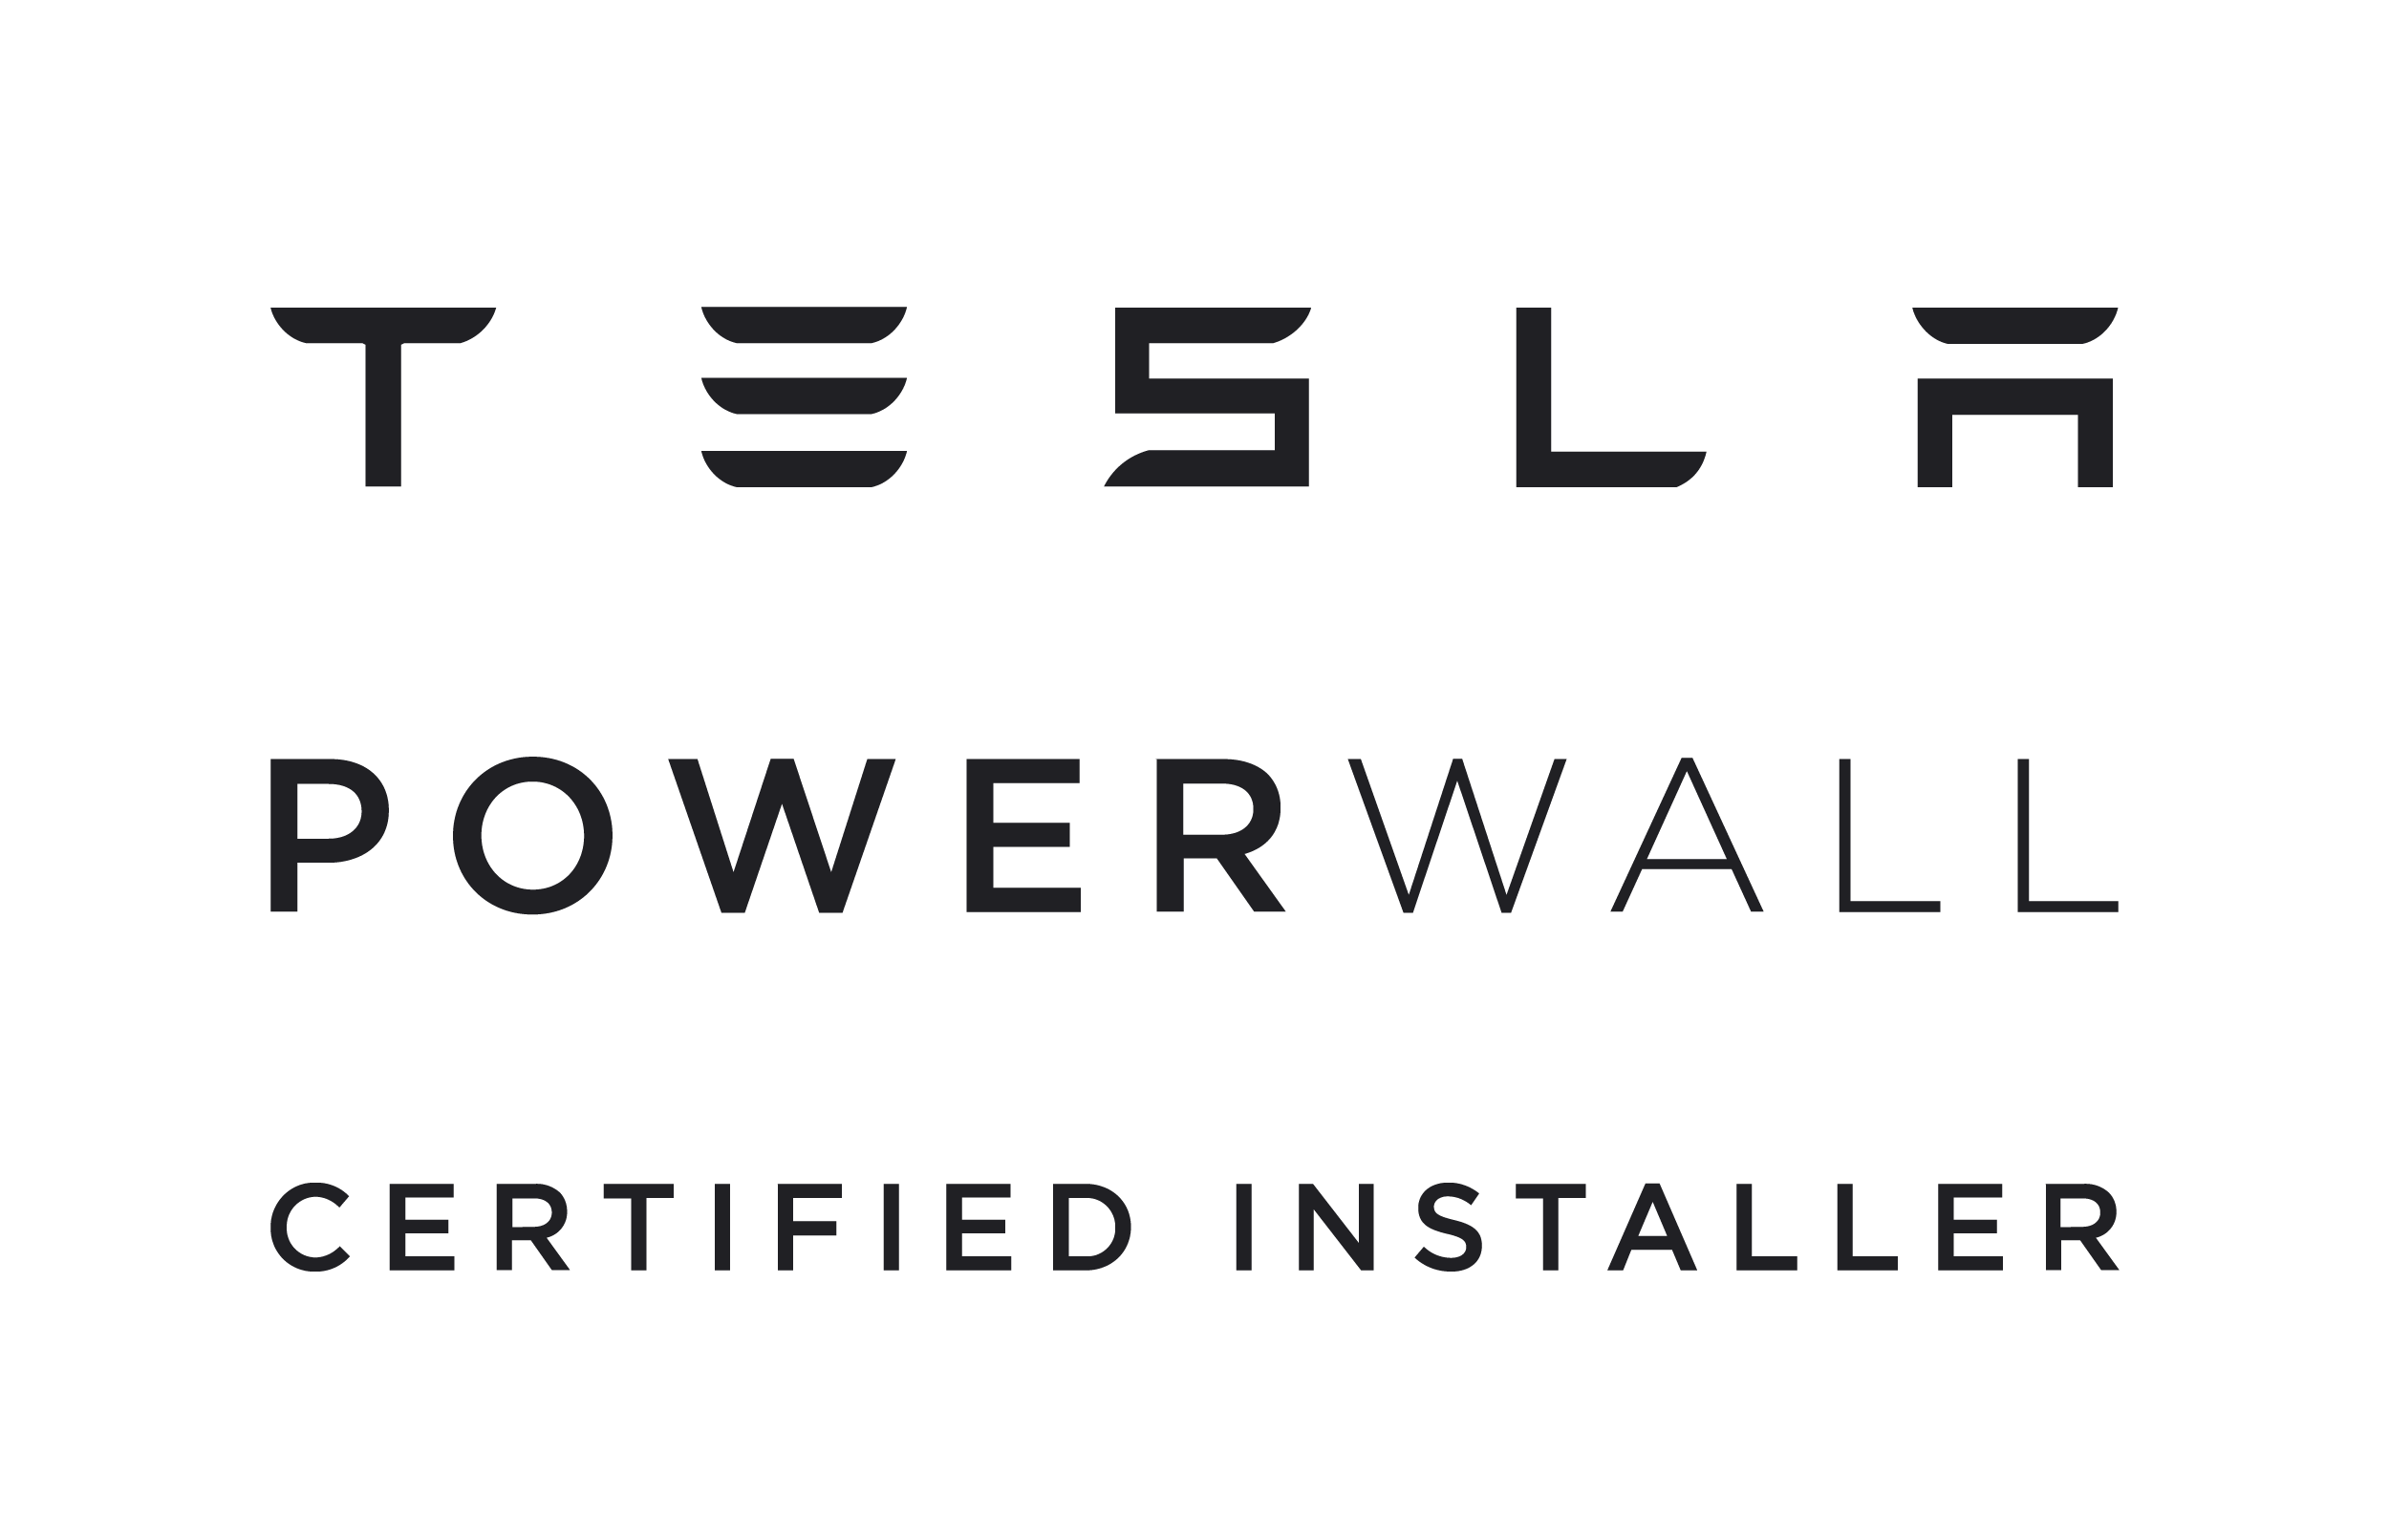 Telsa Powerwall Certified Installer